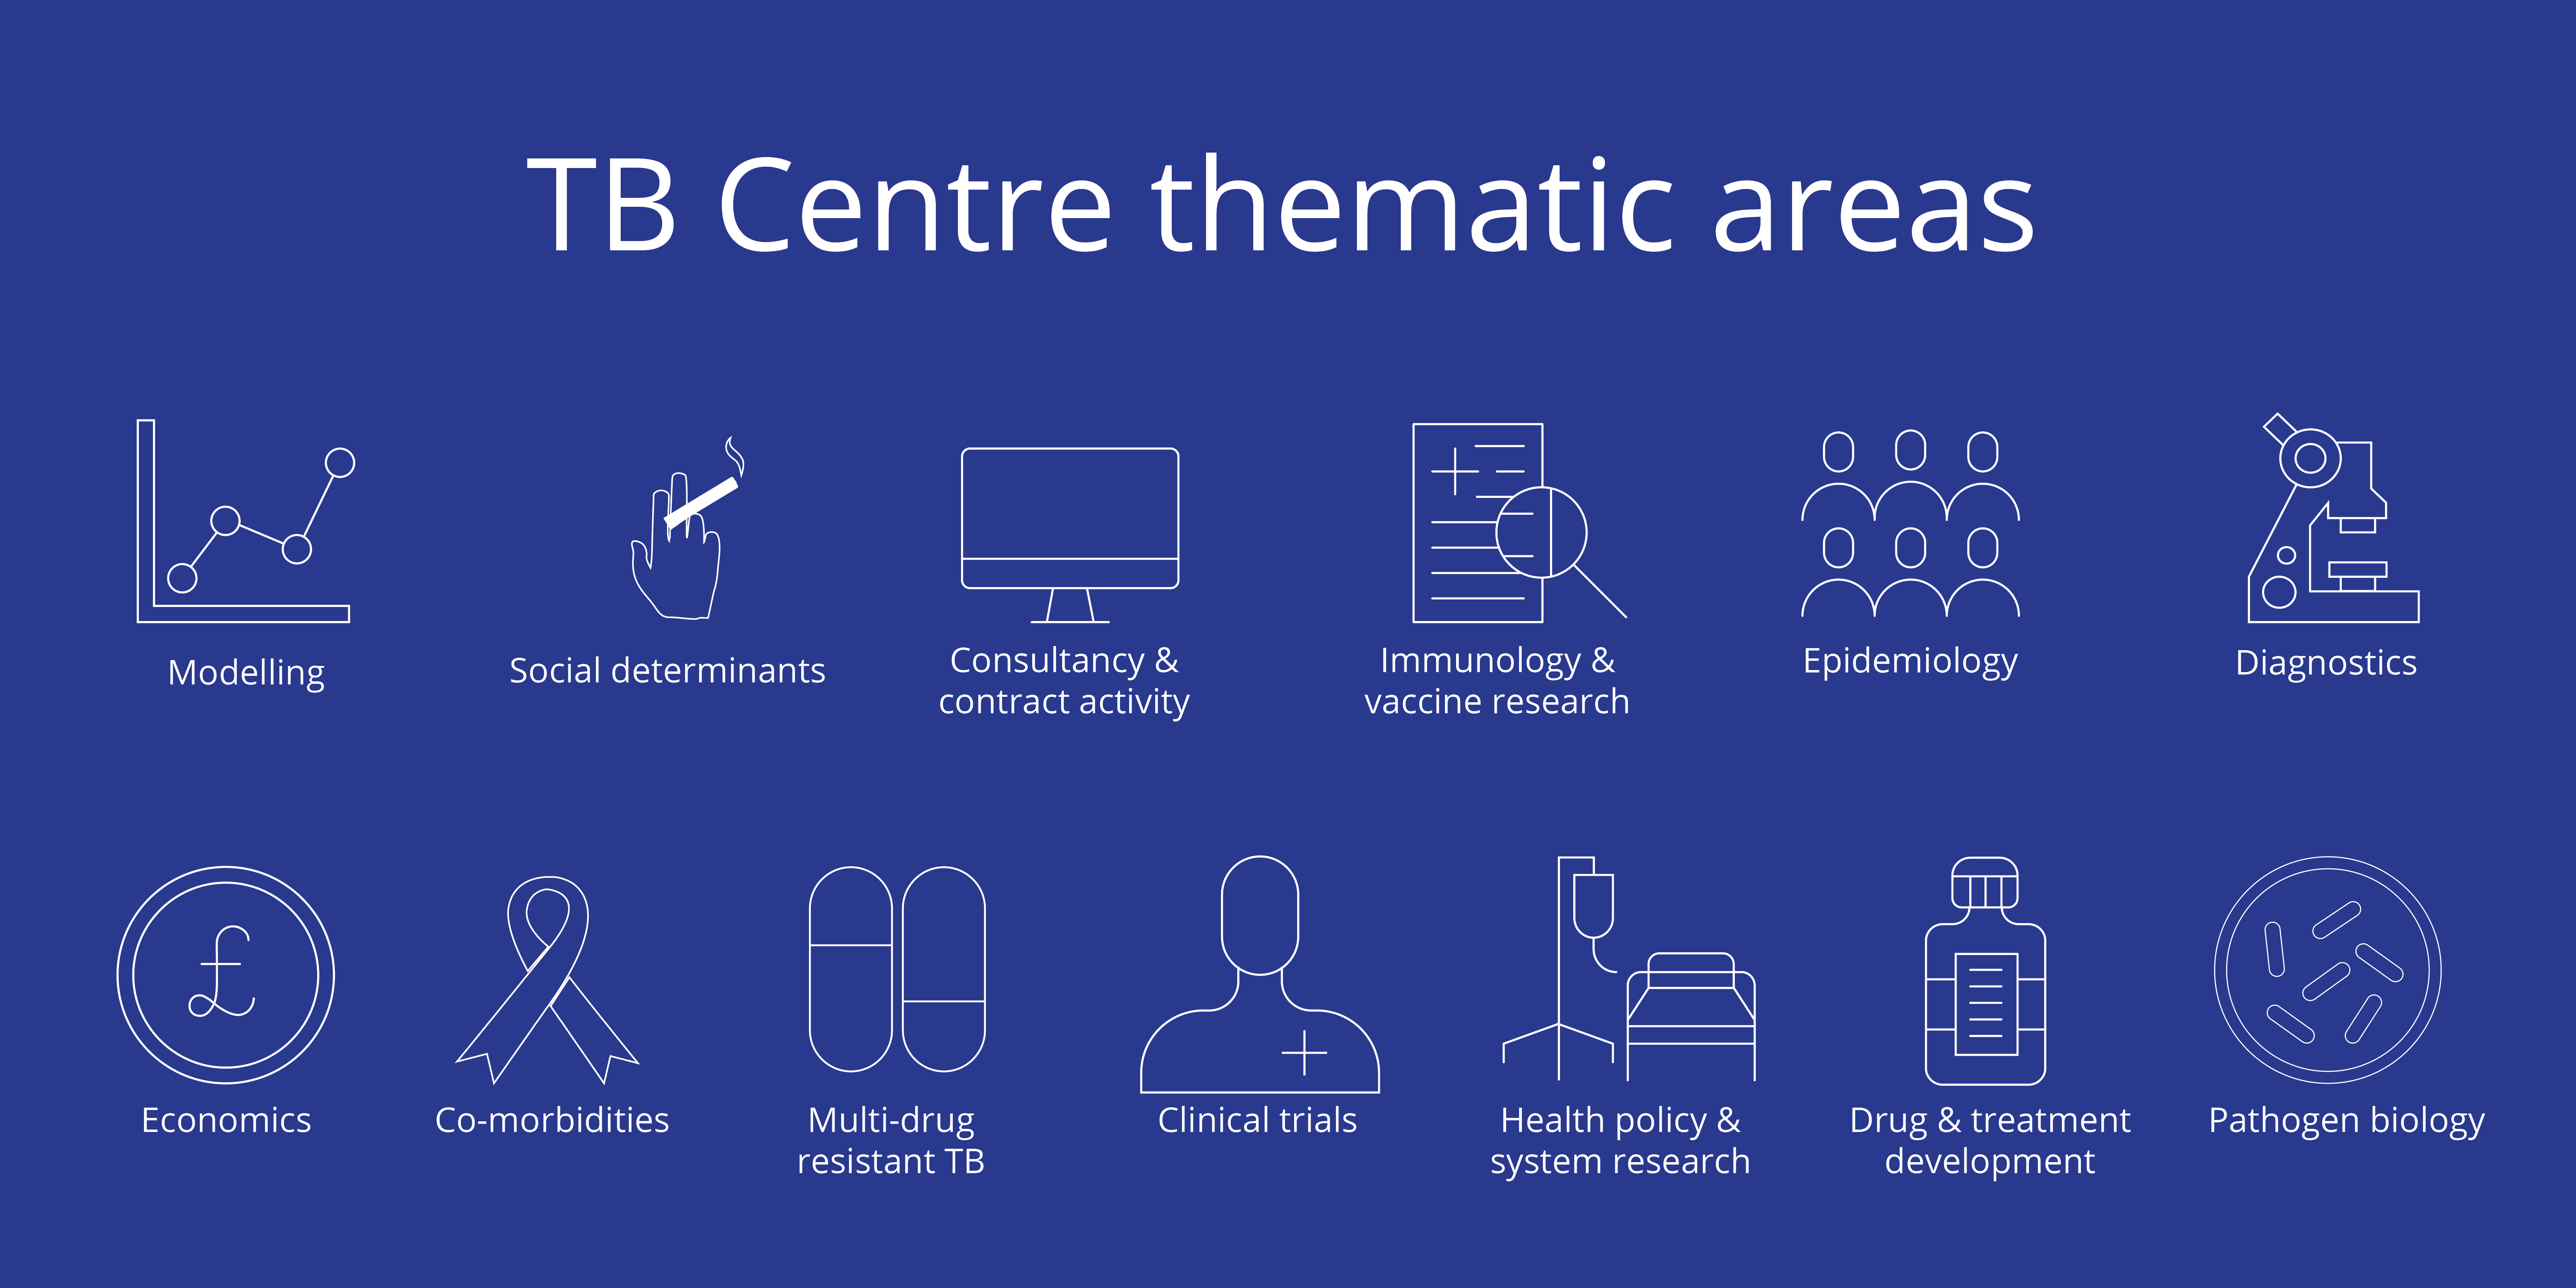 Tb Centre - key themes